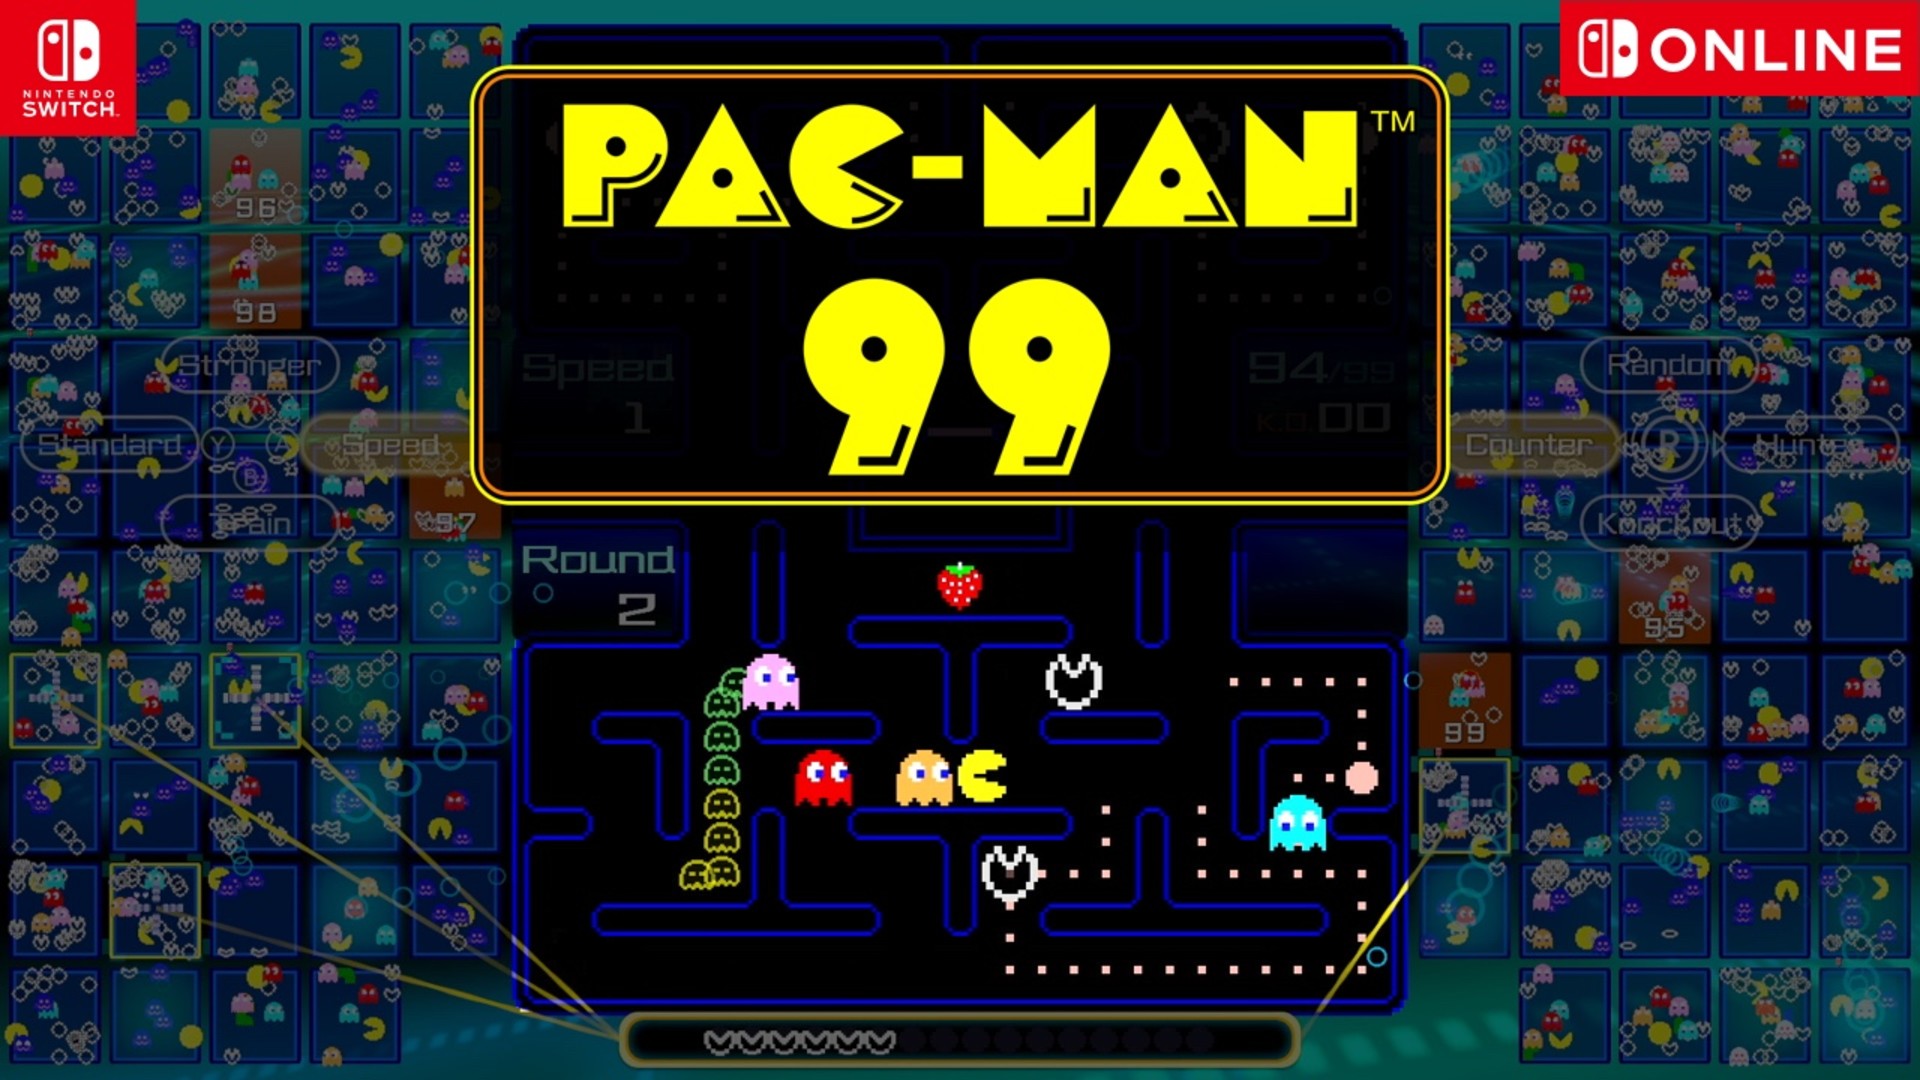 Pac-Man 99 รูปแบบ Battle Royale เปิดให้เล่นแล้วผ่าน Nintendo Switch